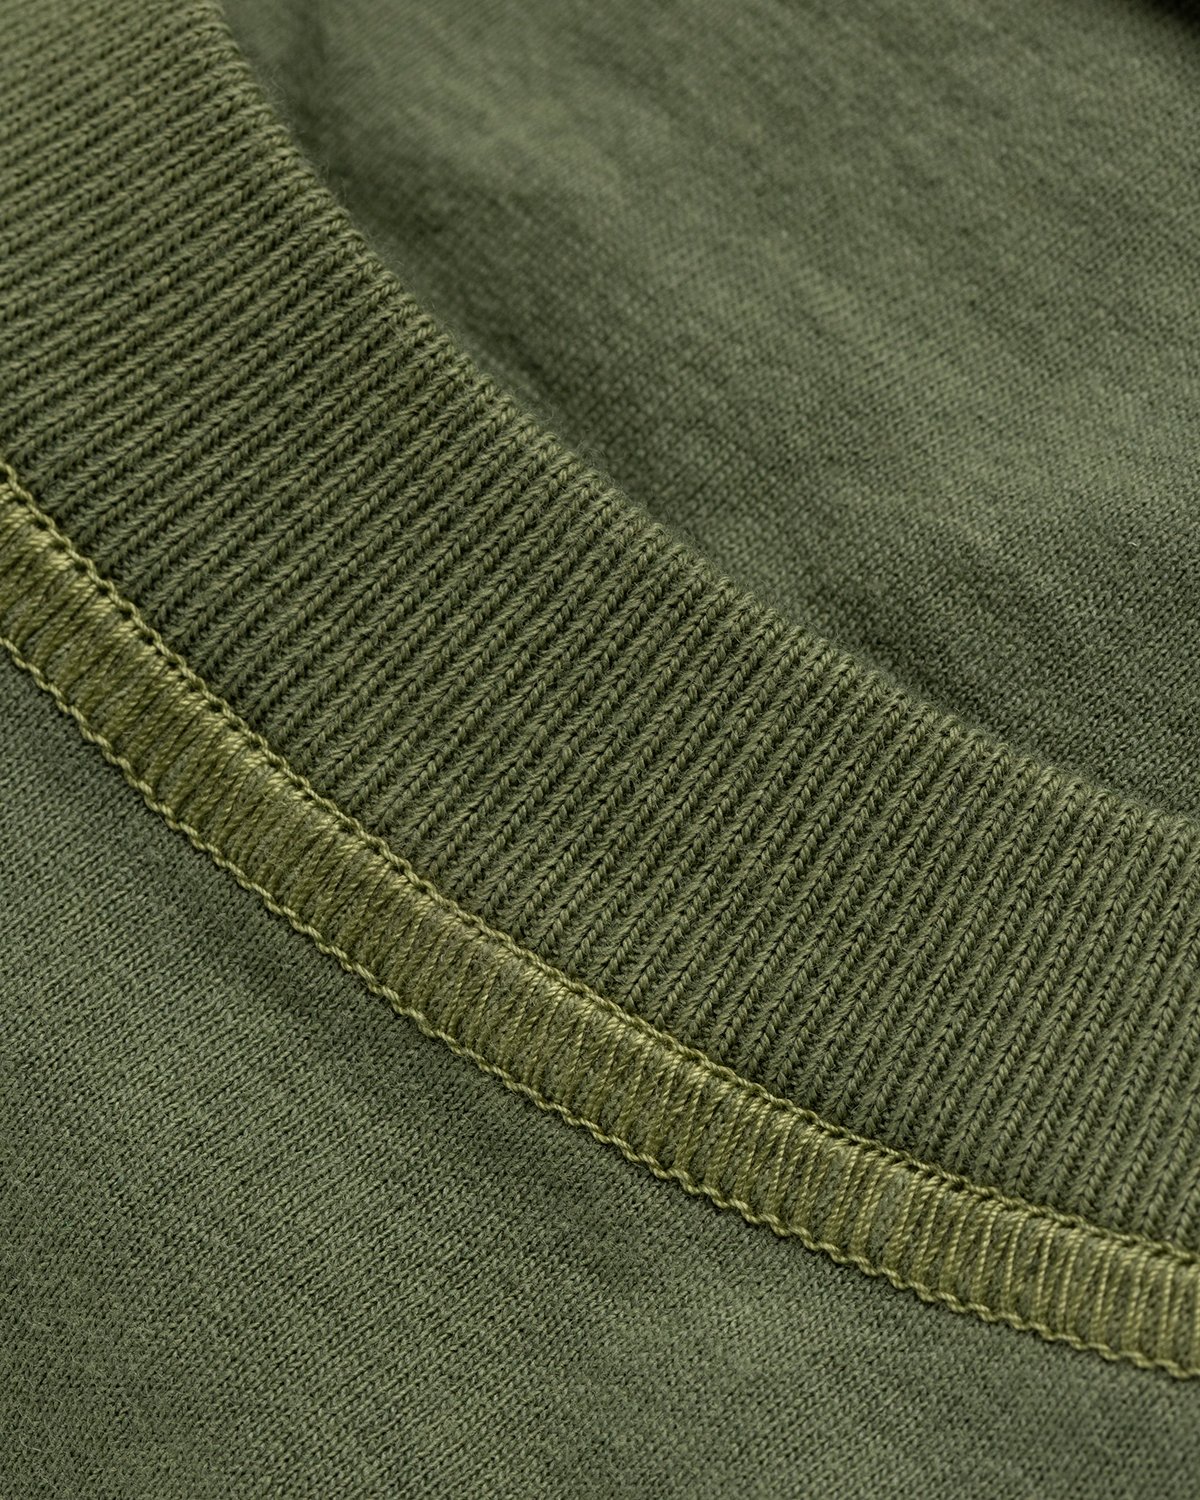 Stone Island - 21857 Garment-Dyed Fissato T-Shirt Olive Green - Clothing - Green - Image 6